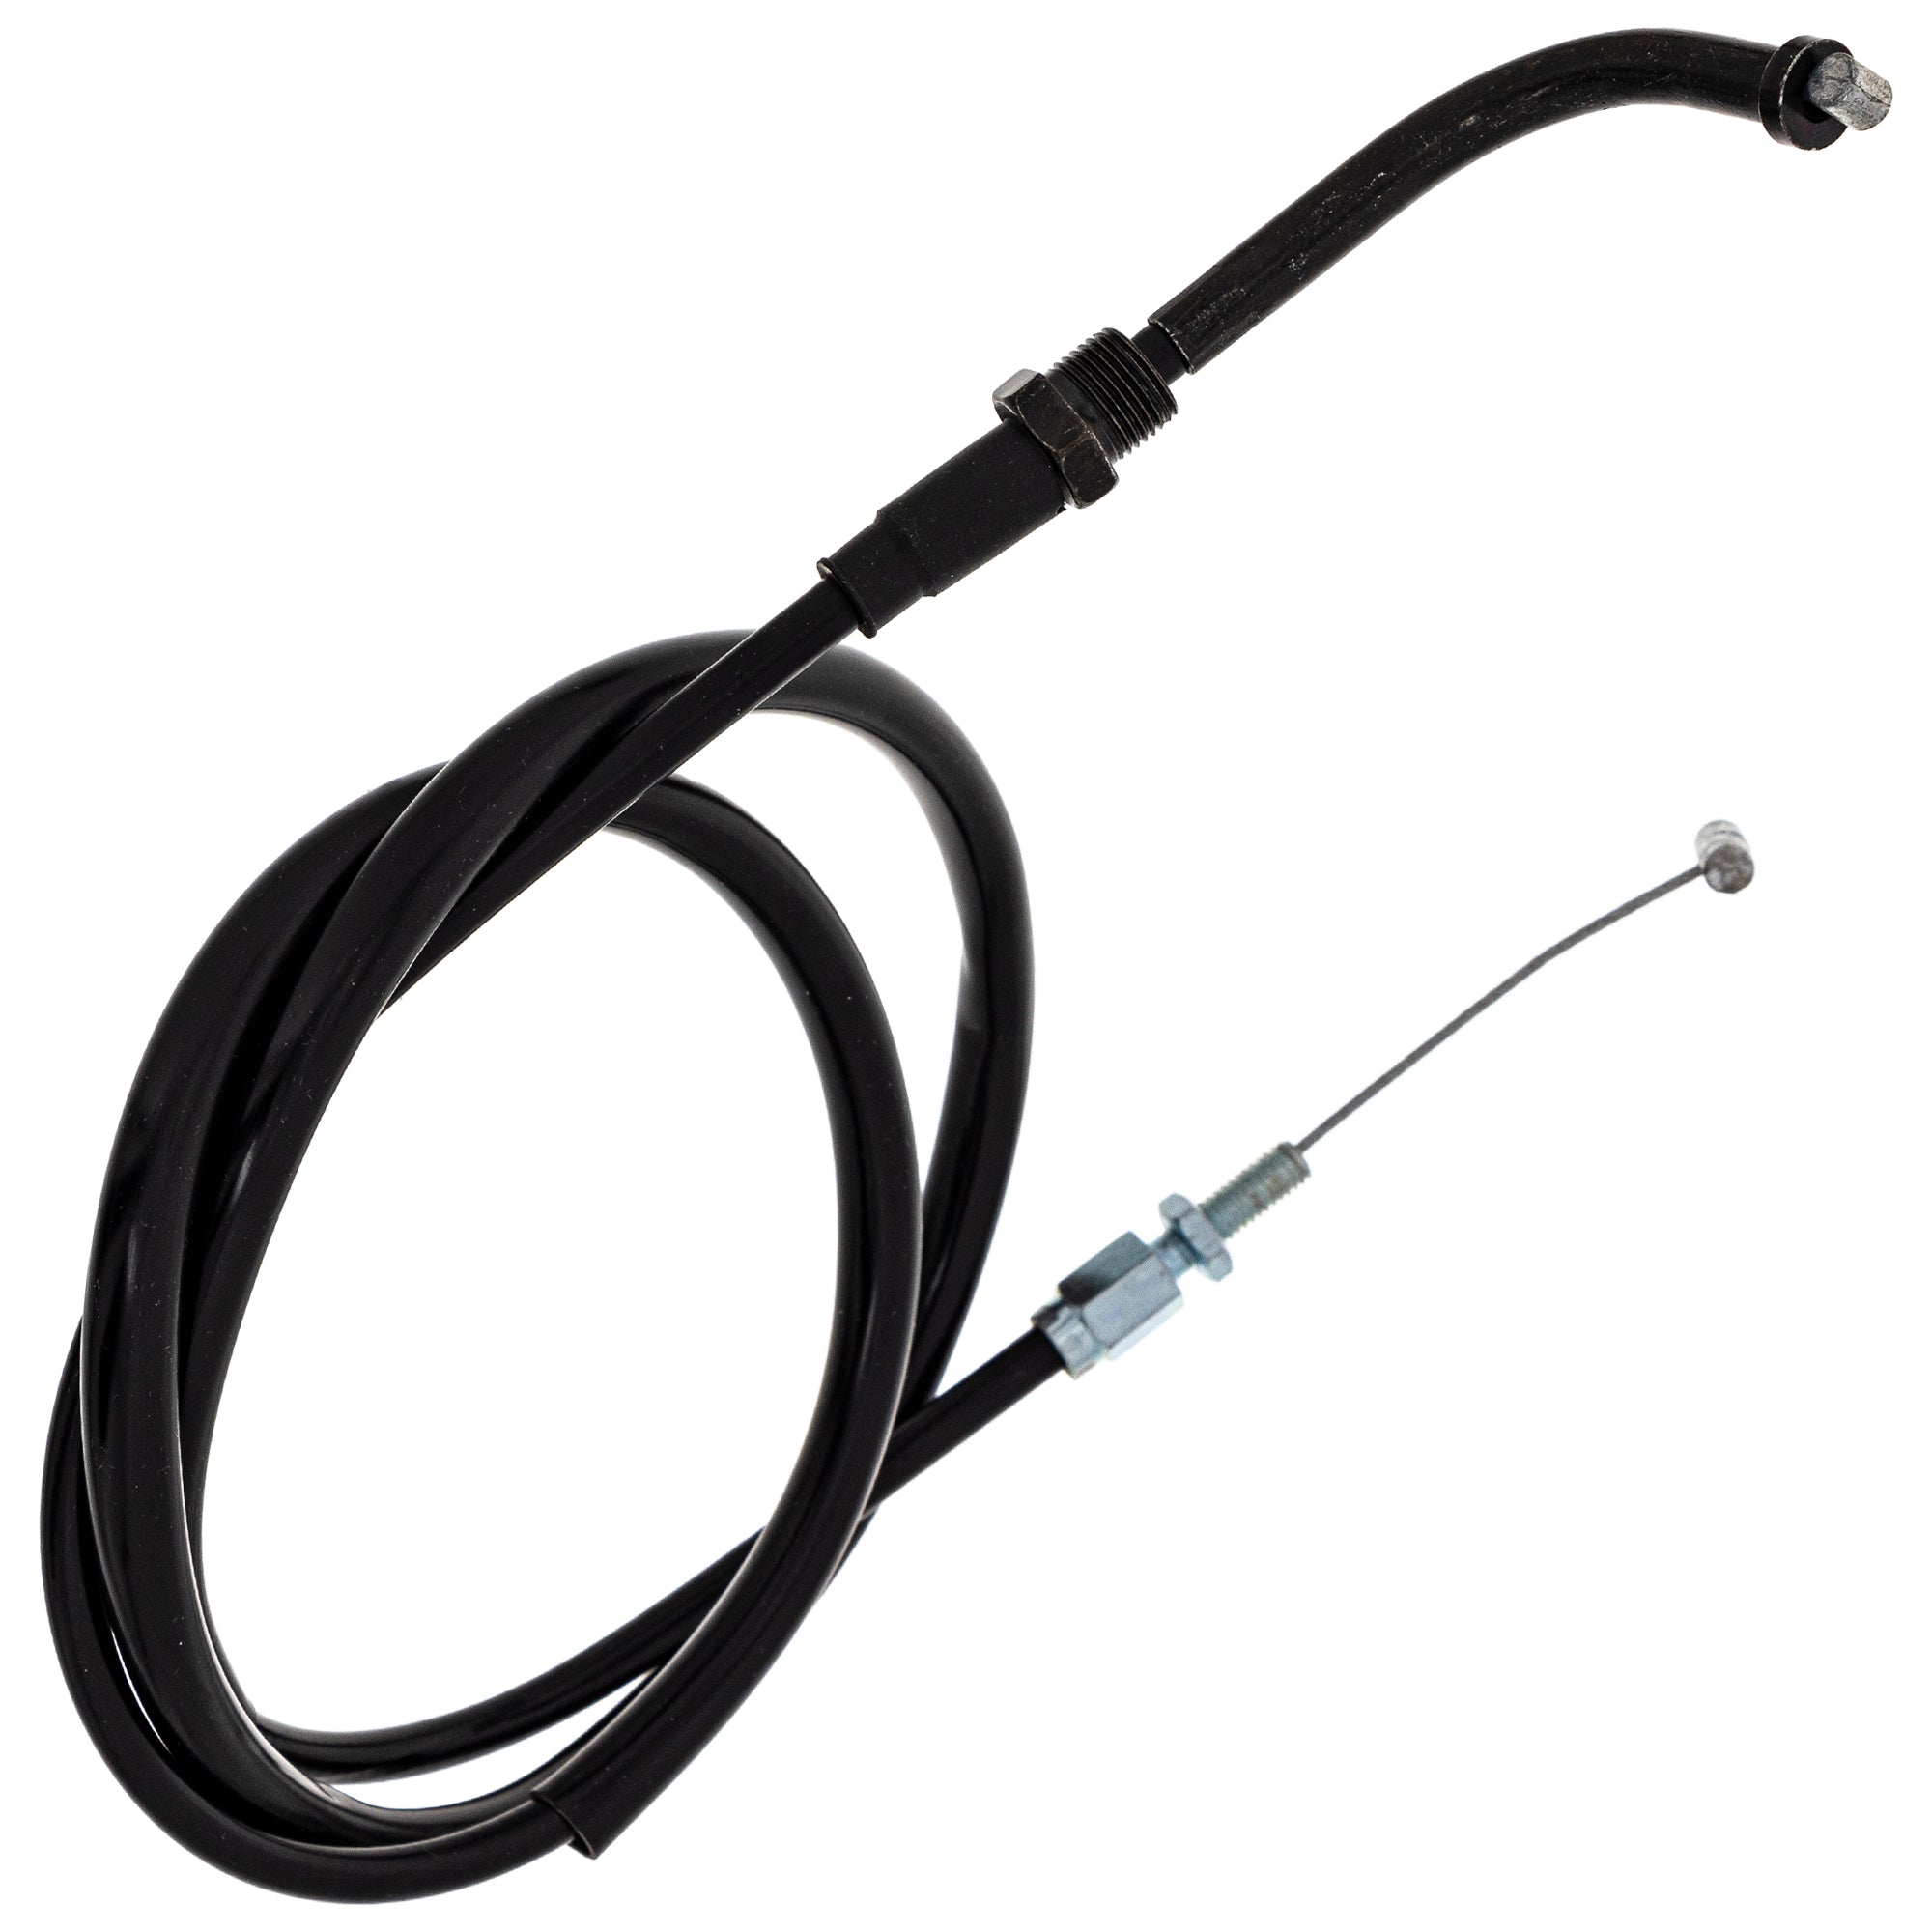 Push Throttle Cable for Honda CB400 CM400 CM450 CX500 17920-449